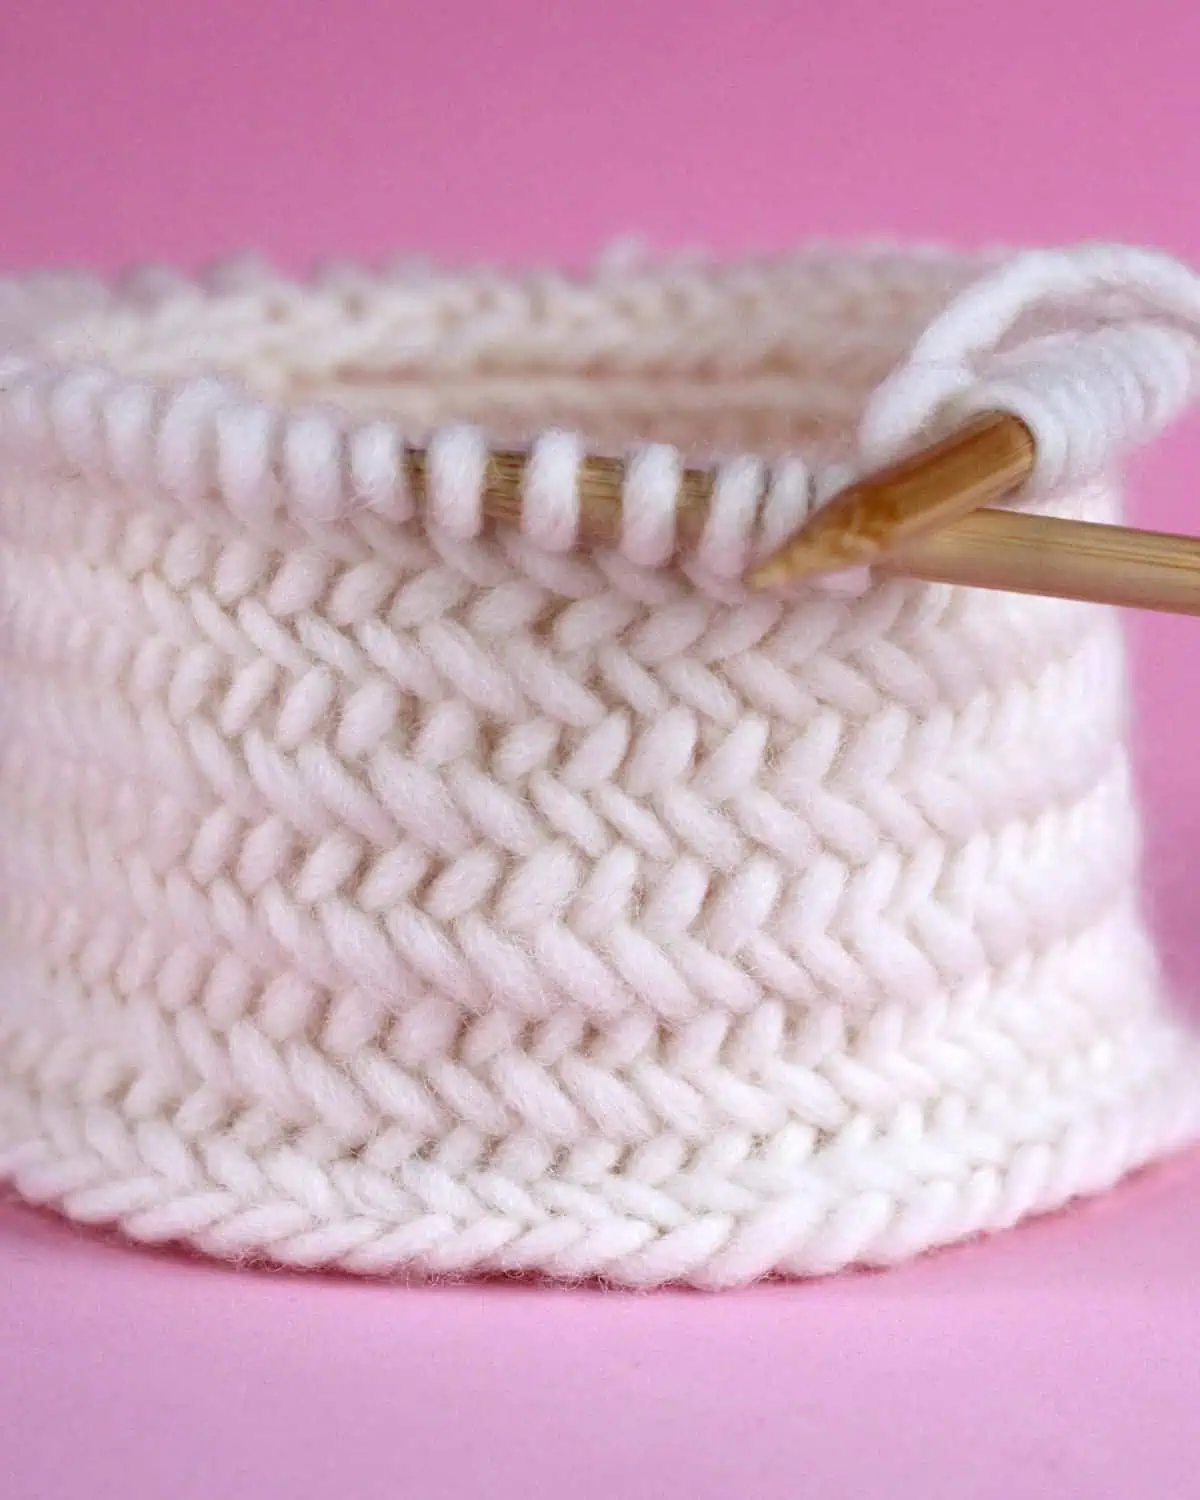 Herringbone knit stitch texture in white colored yarn on circular needles.